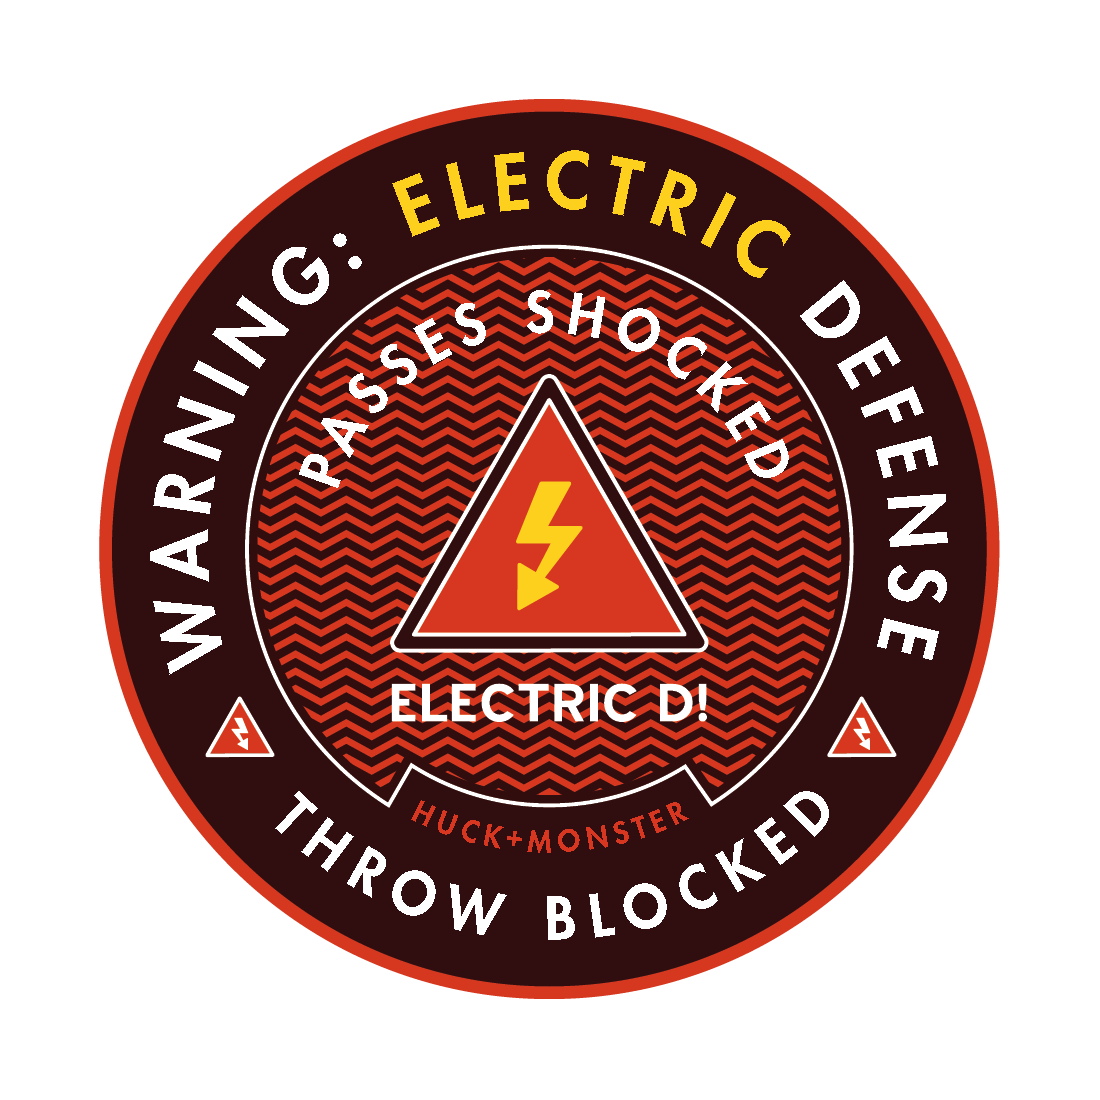 Warning: Electric Defense